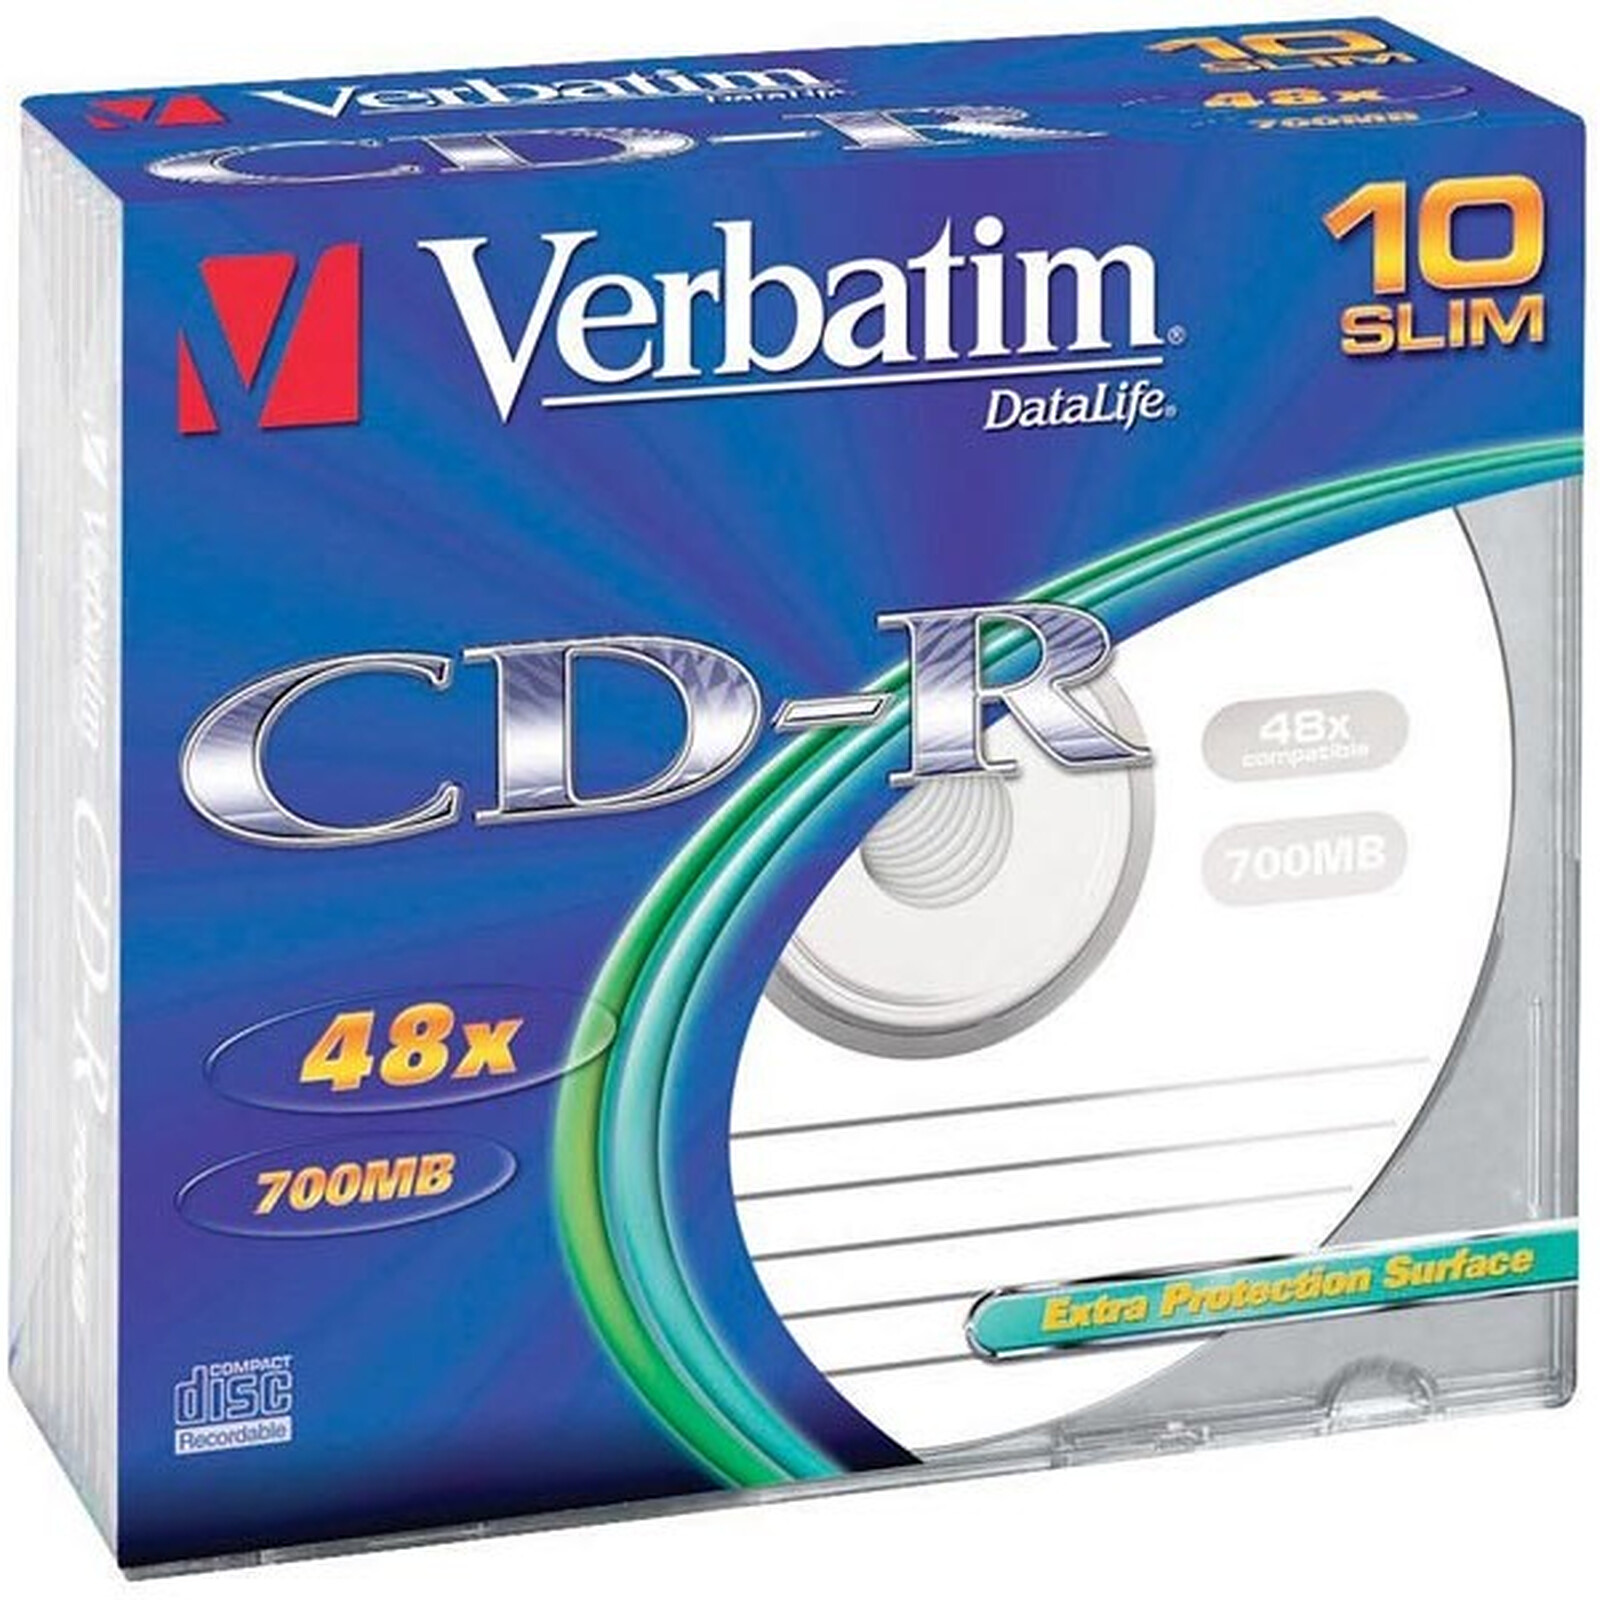 CD vierge VERBATIM P10 80Min 52X JC